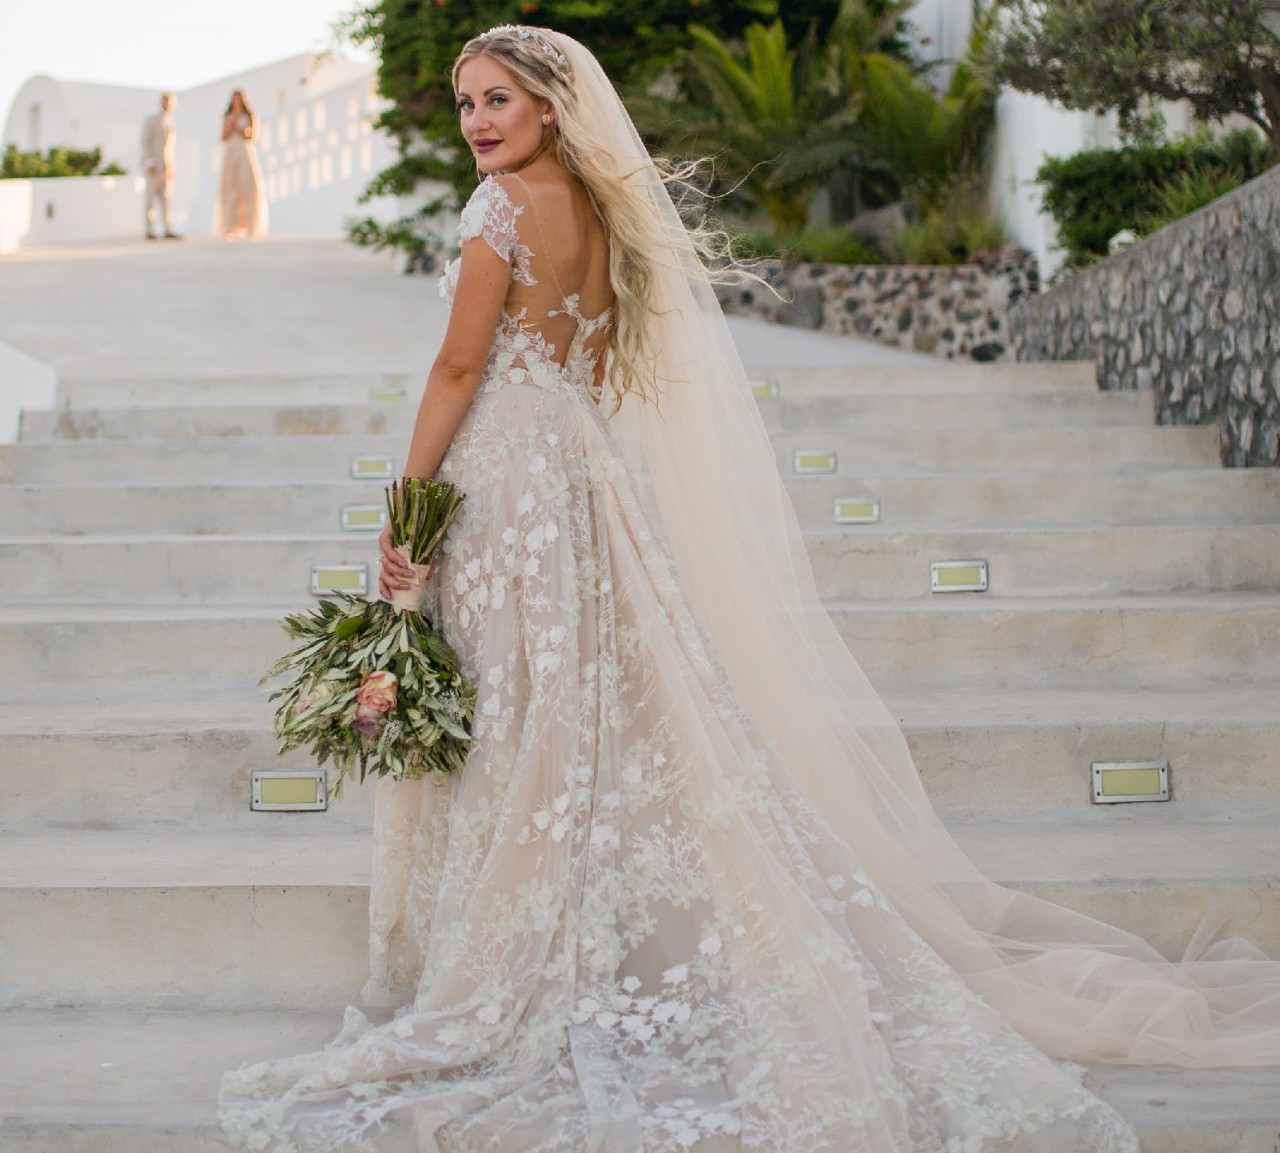 Galia Lahav Coco Preowned Wedding Dress Save 58% - Stillwhite